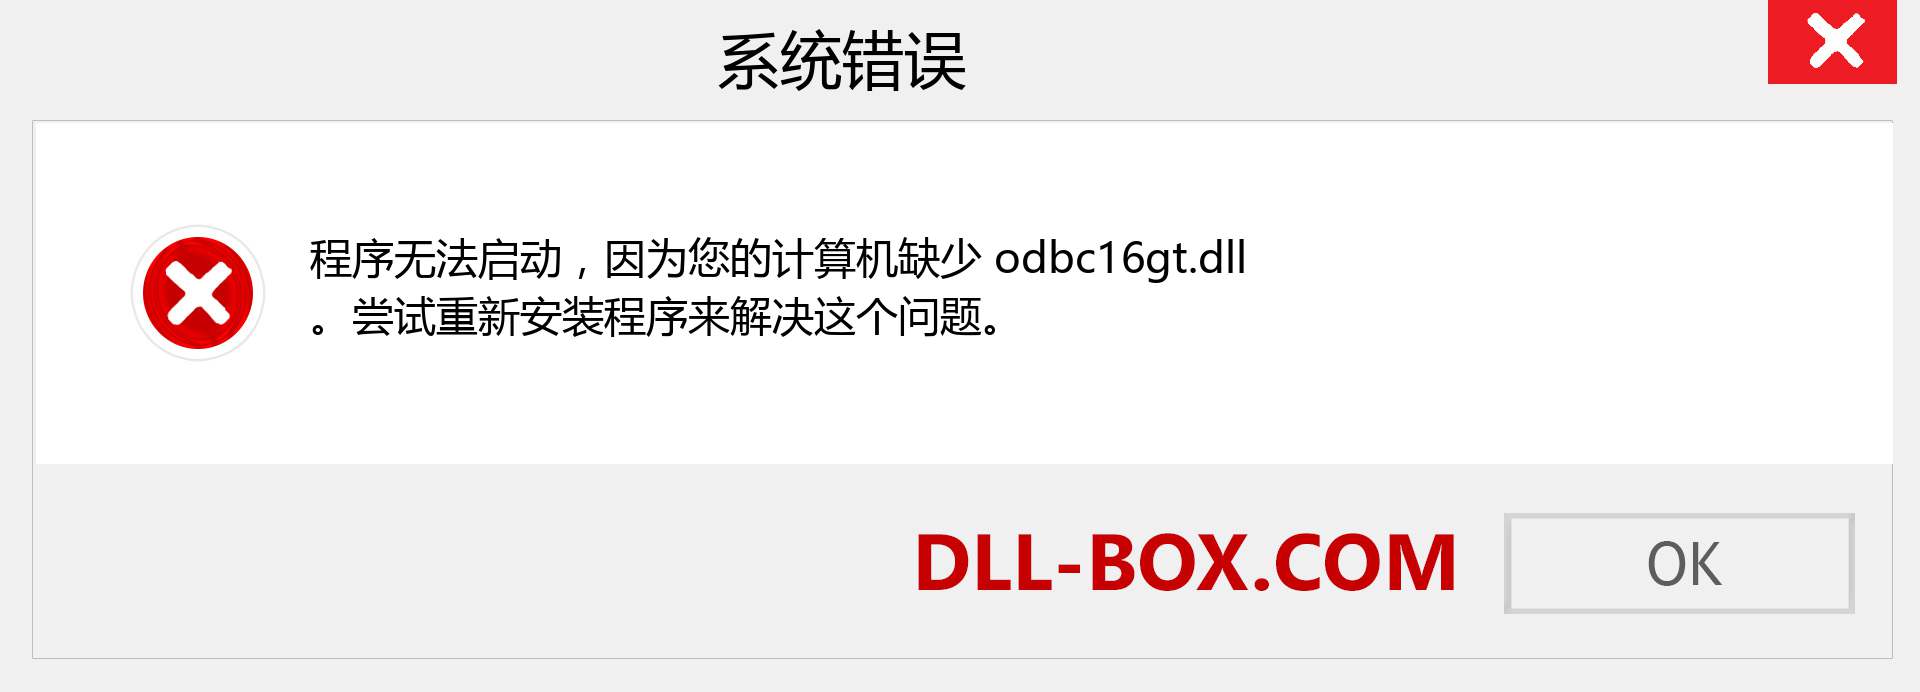 odbc16gt.dll 文件丢失？。 适用于 Windows 7、8、10 的下载 - 修复 Windows、照片、图像上的 odbc16gt dll 丢失错误